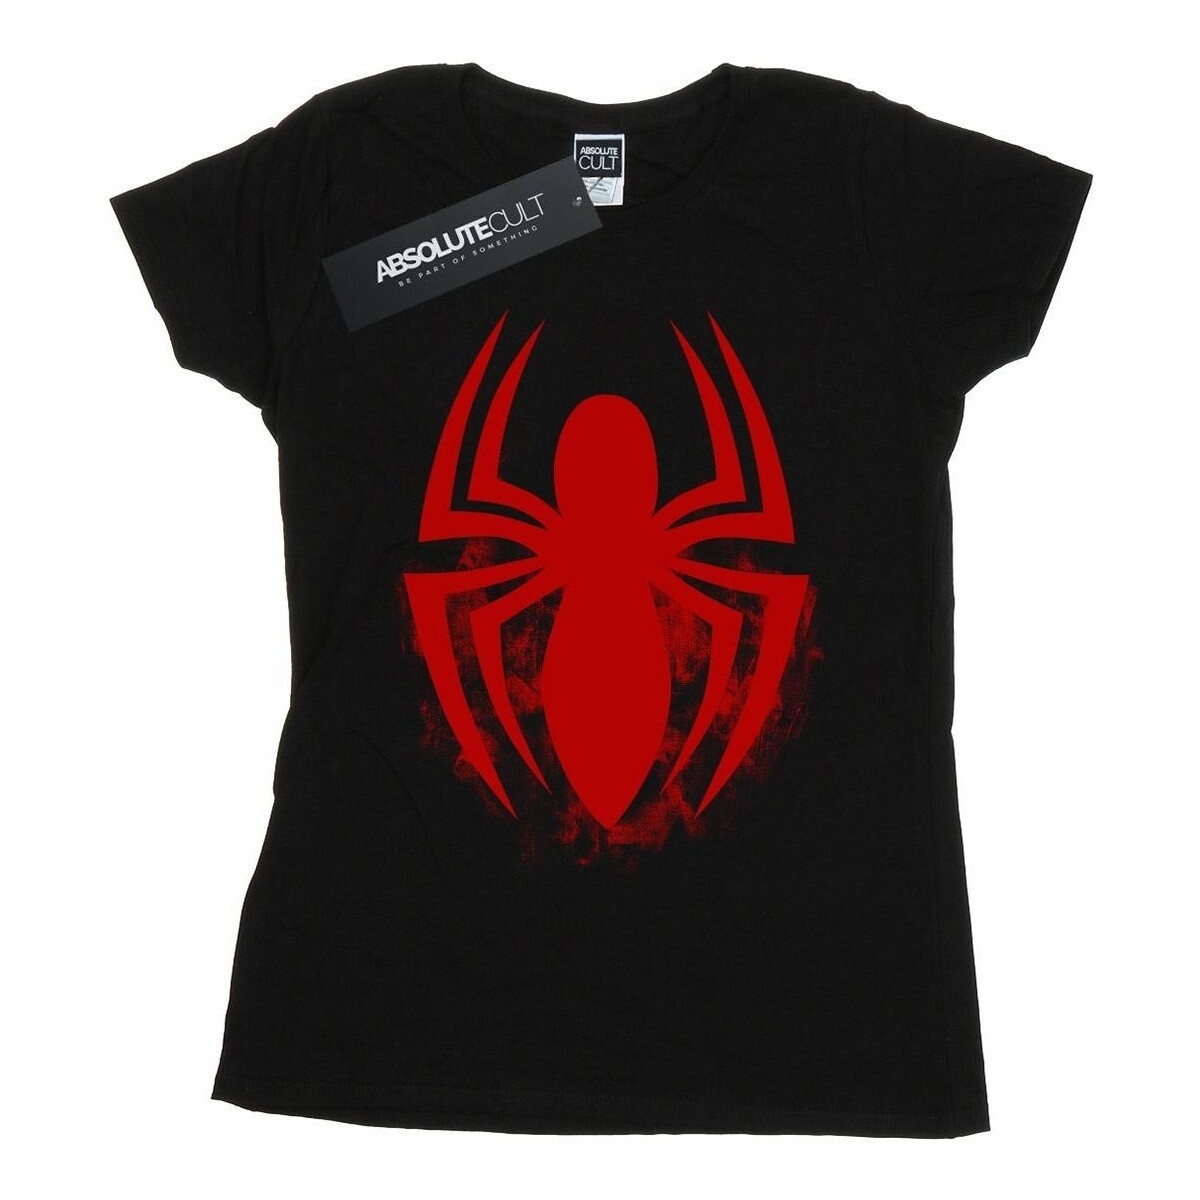 textil Mujer Camisetas manga larga Marvel Spider-Man Logo Emblem Negro